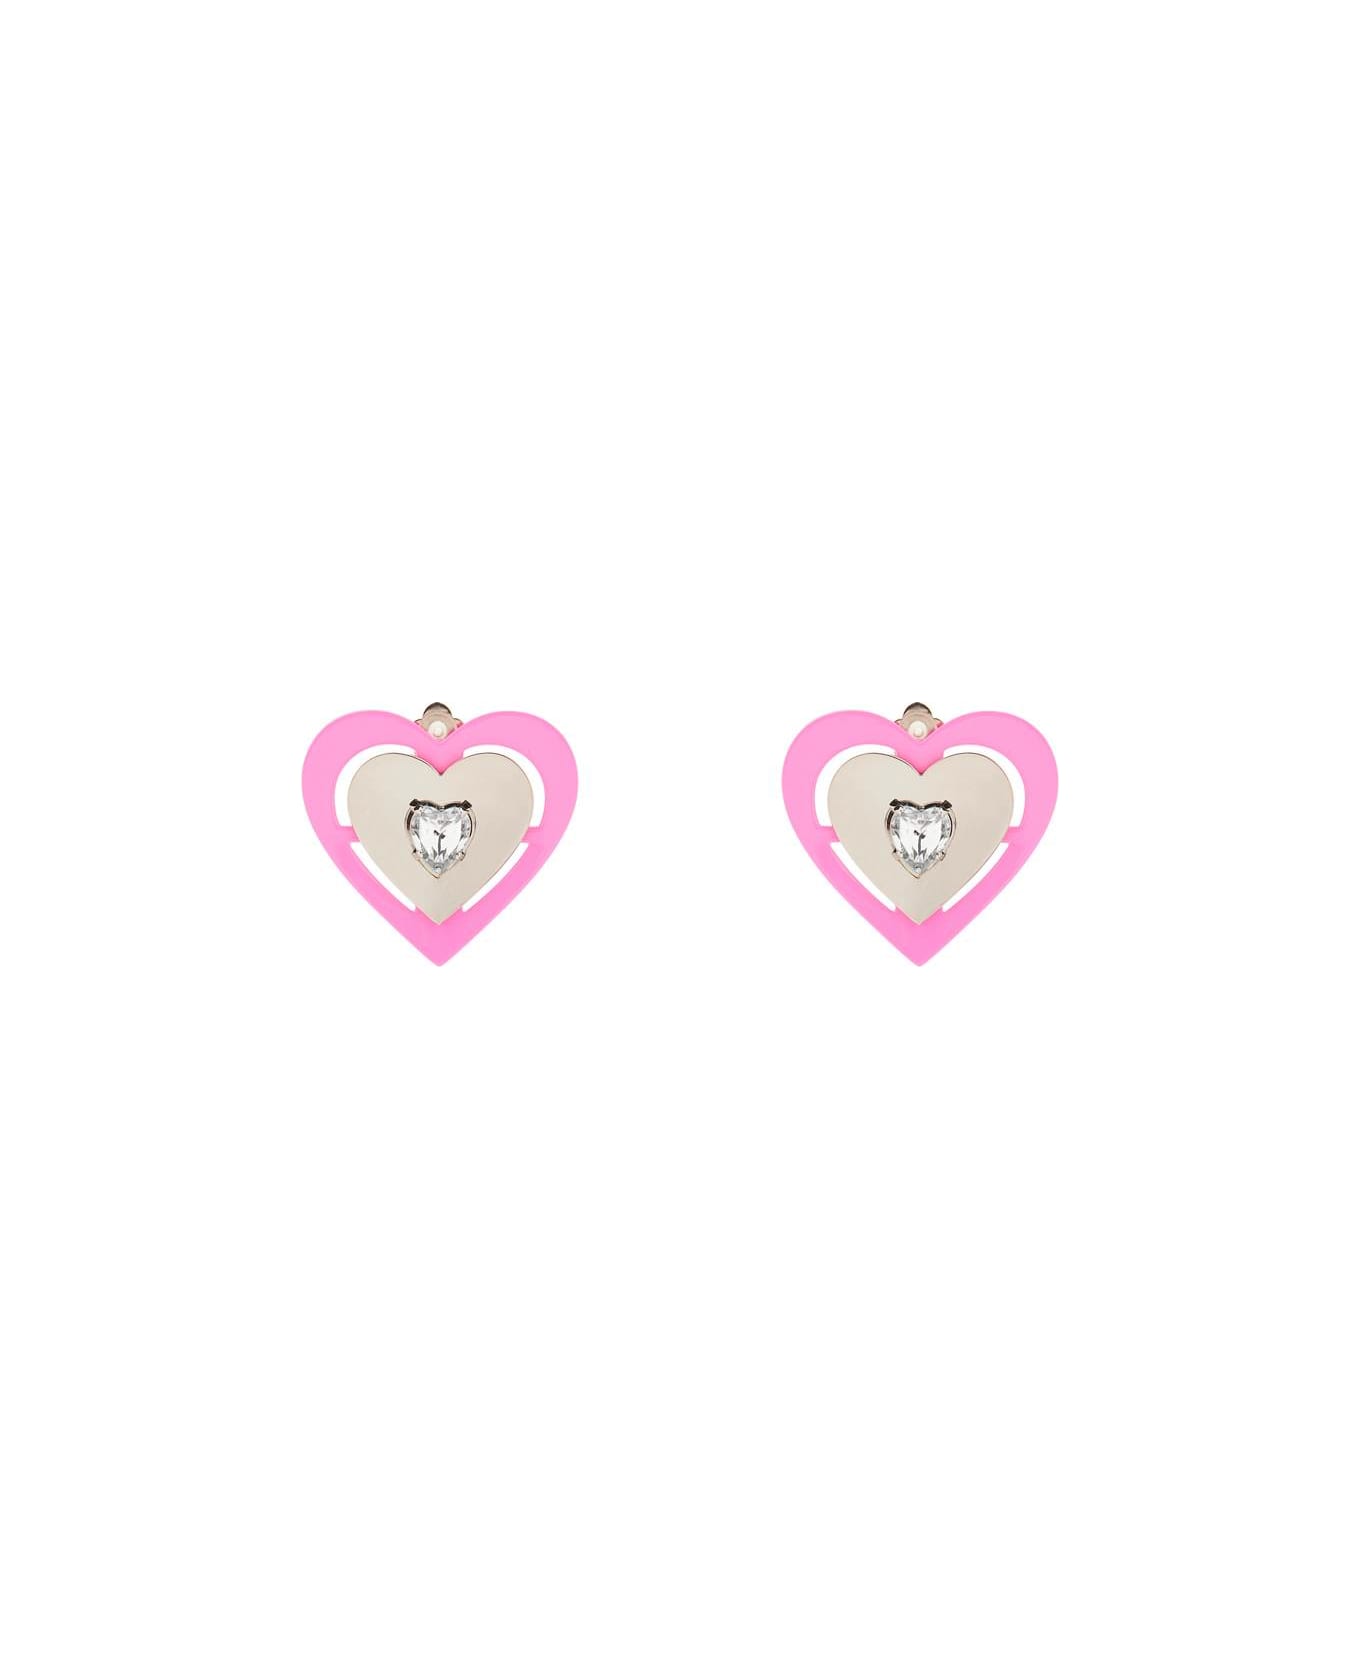 SafSafu 'pink Neon Heart' Clip-on Earrings - SILVER/PINK